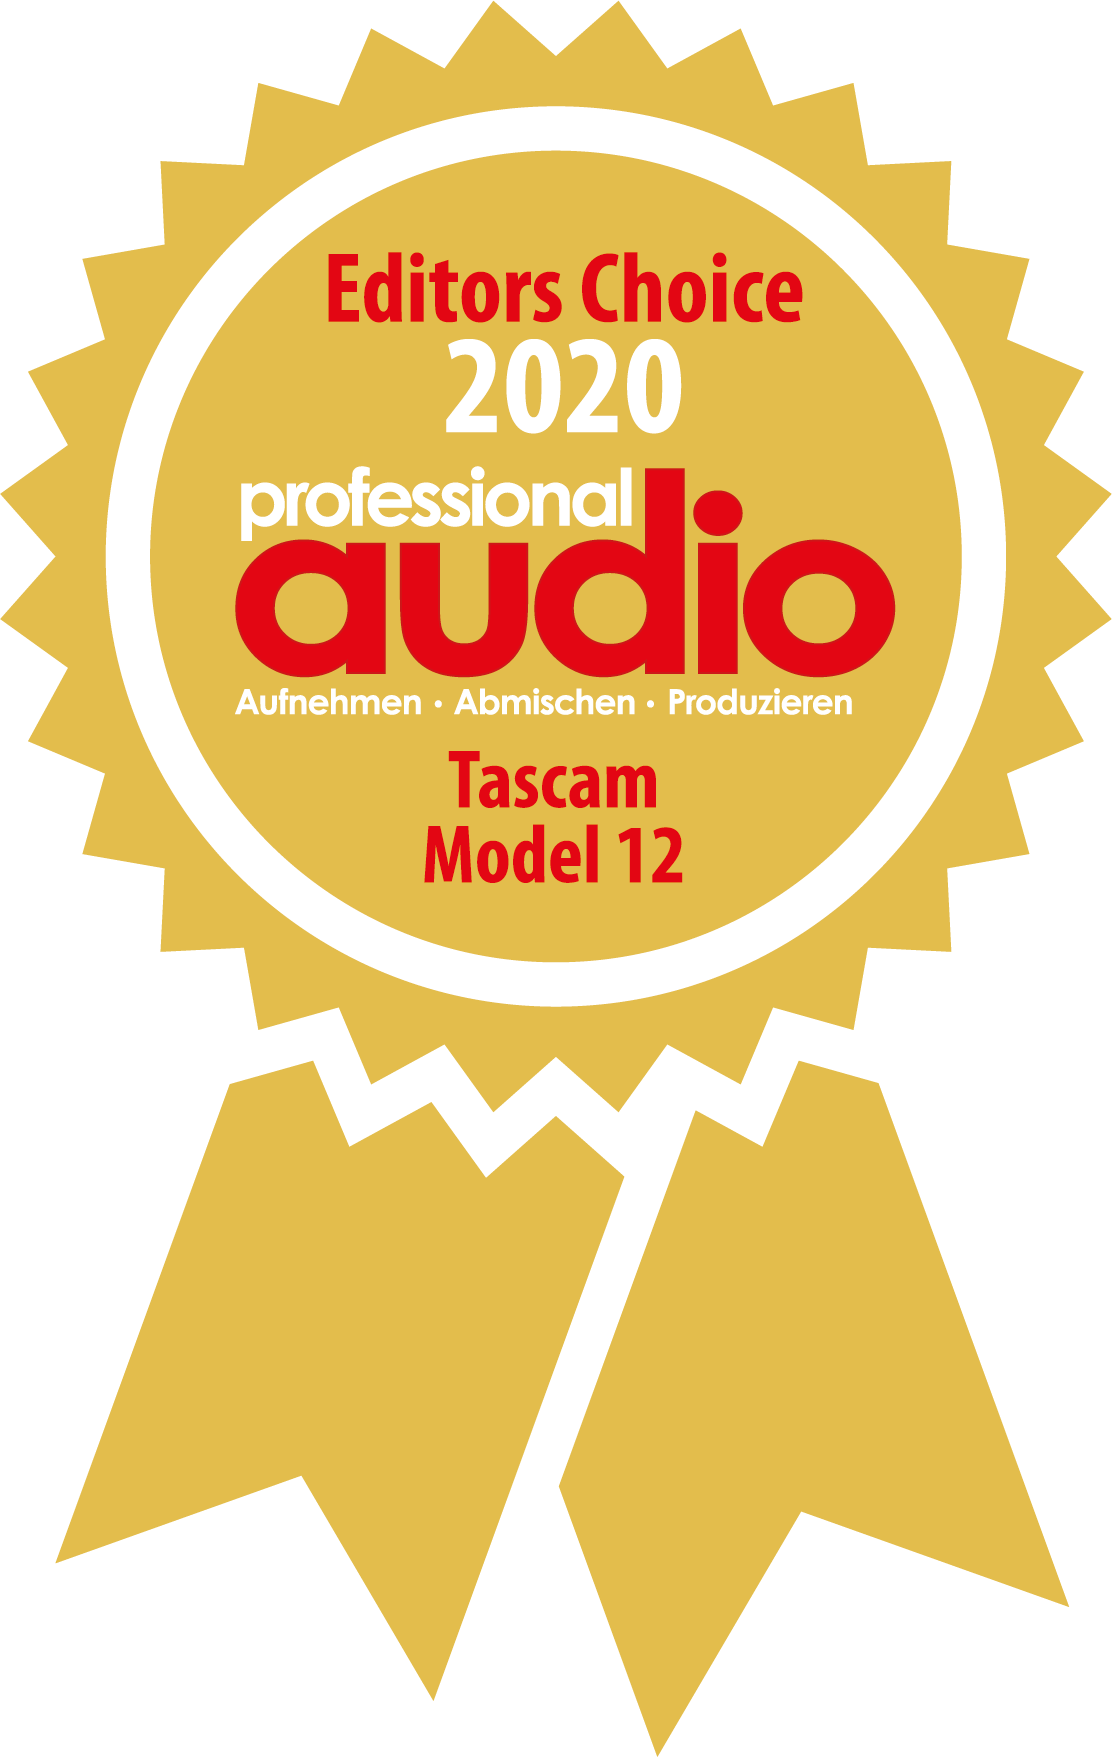 Tascam Model 24 ist Editor’s Choice 2020